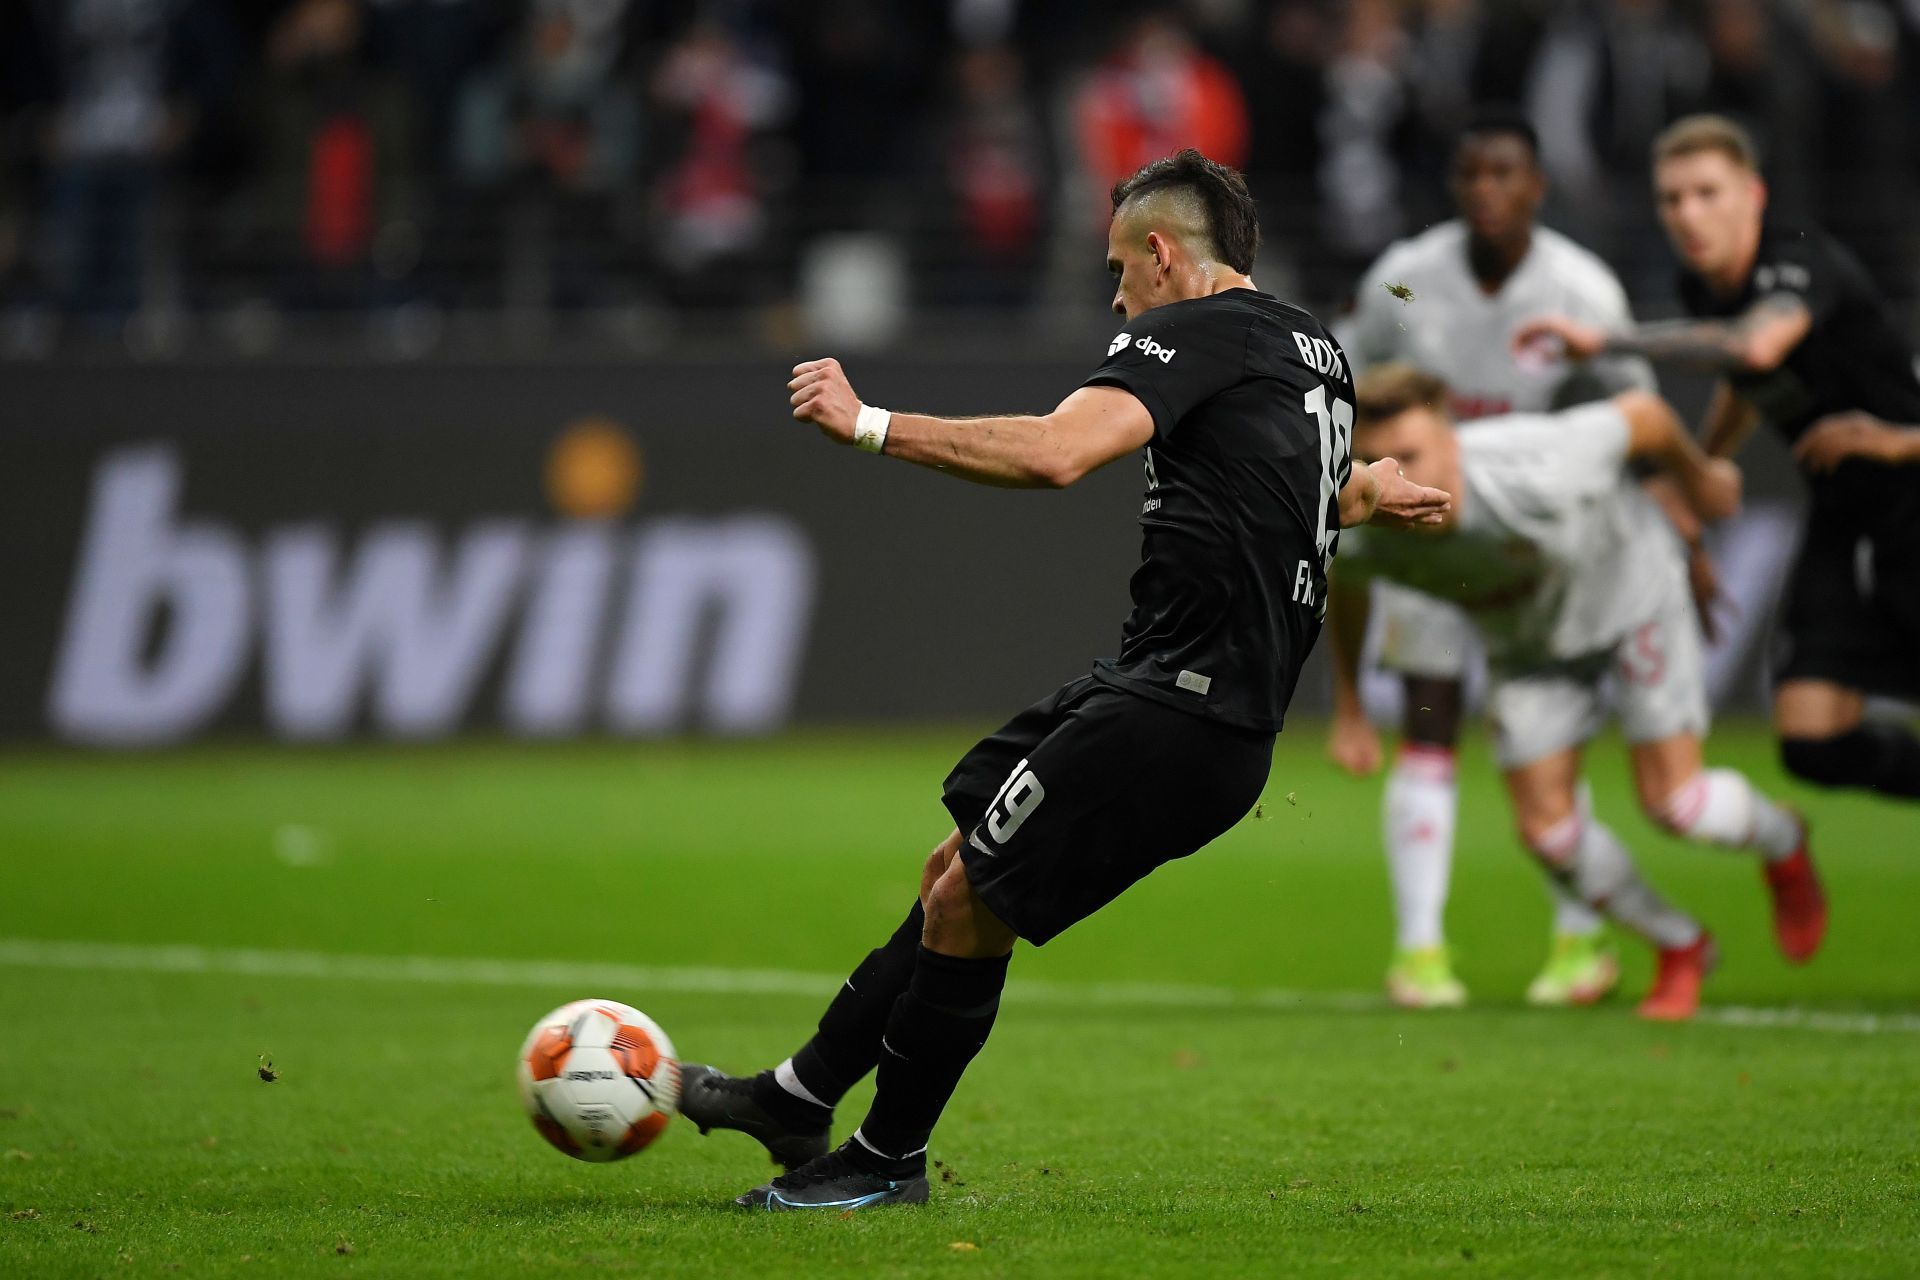 Eintracht Frankfurt take on Bochum in a Bundesliga game on Sunday